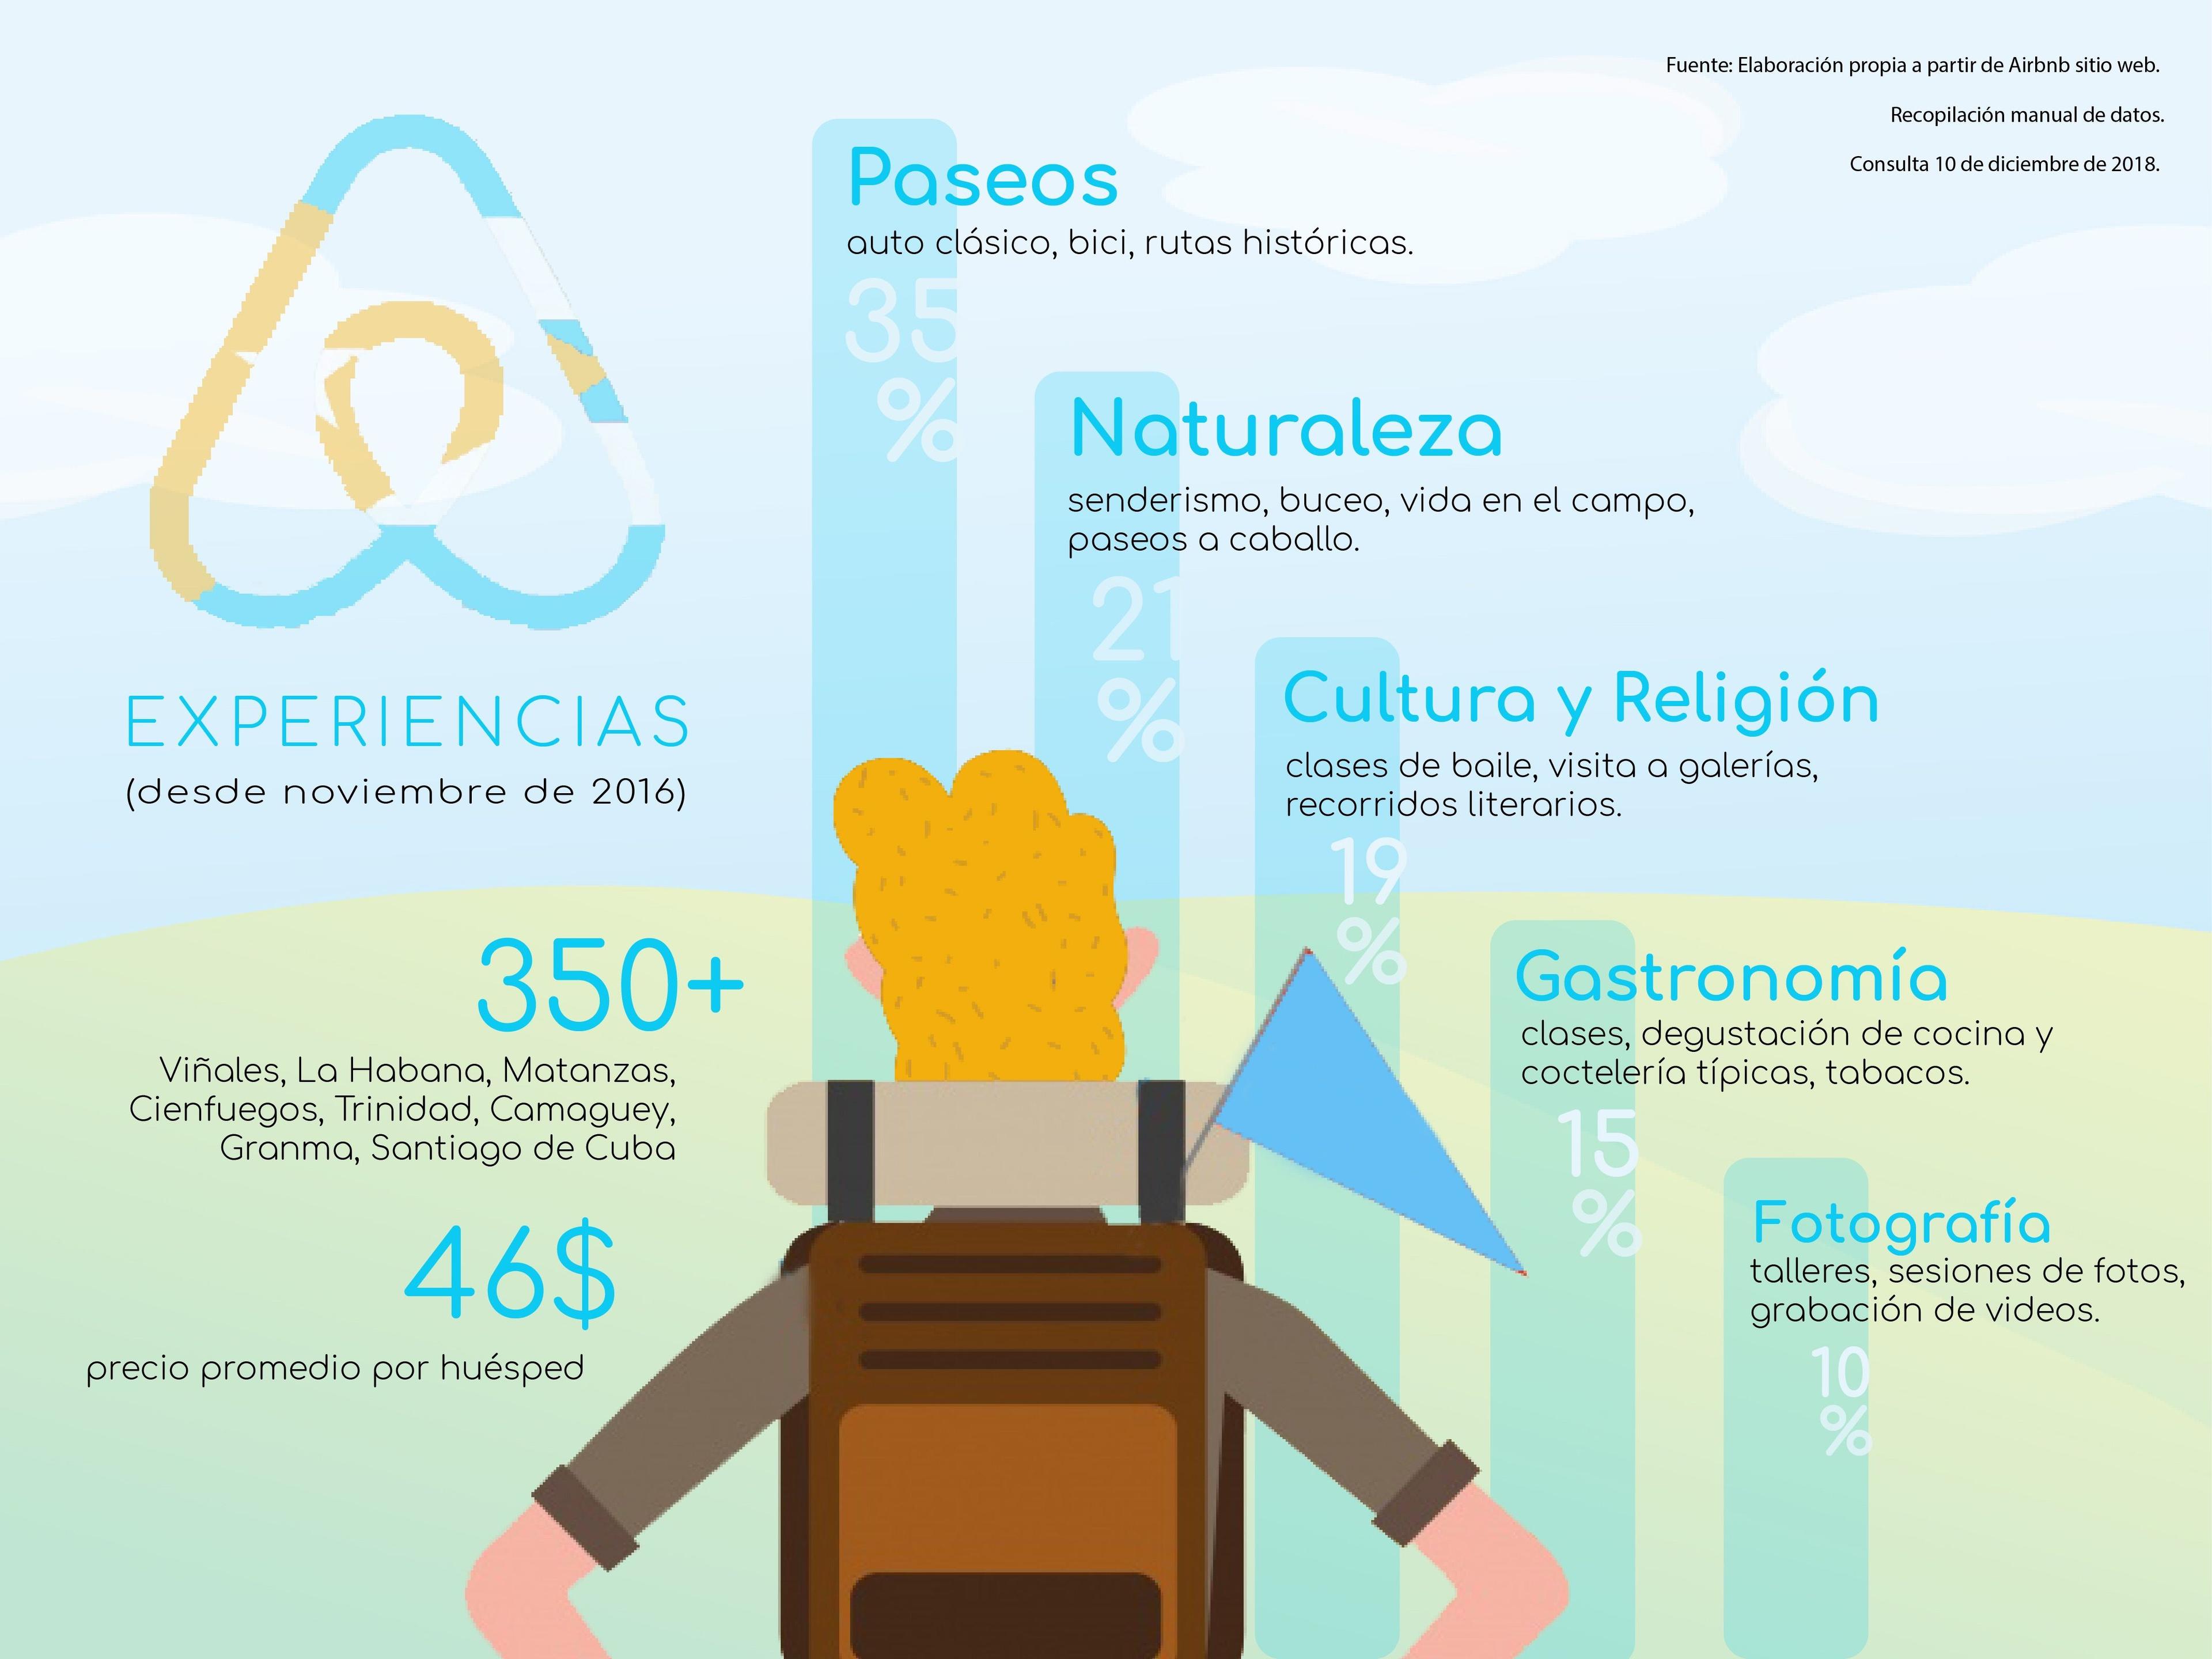 Experiencias que ofrece AirBnB en Cuba agrupadas por categorías. Infografía: Cynthia De La Cantera.